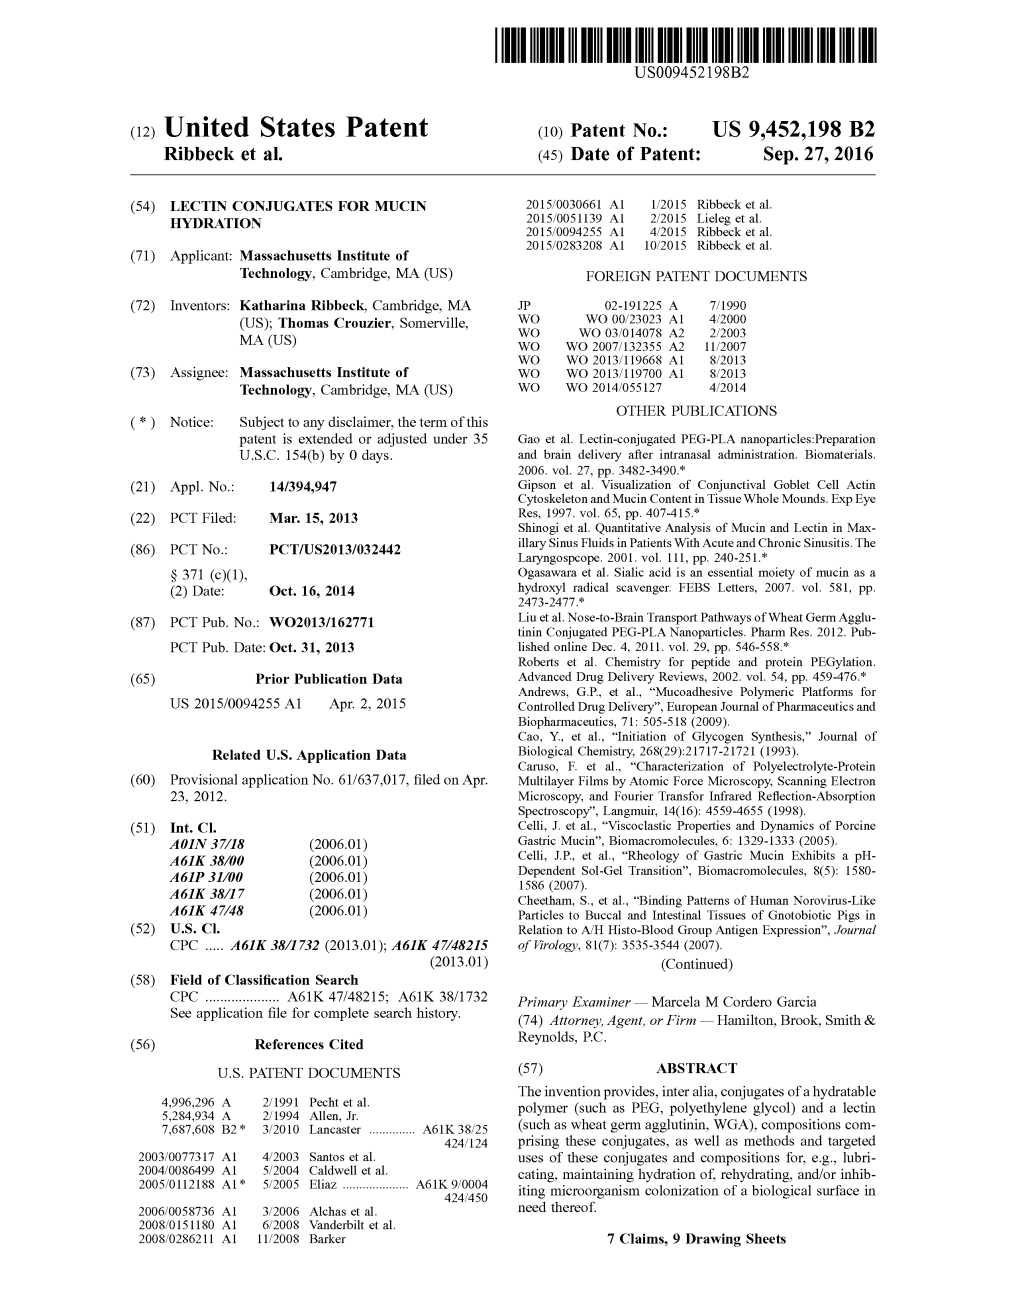 (12) United States Patent (10) Patent No.: US 9,452,198 B2 Ribbeck Et Al